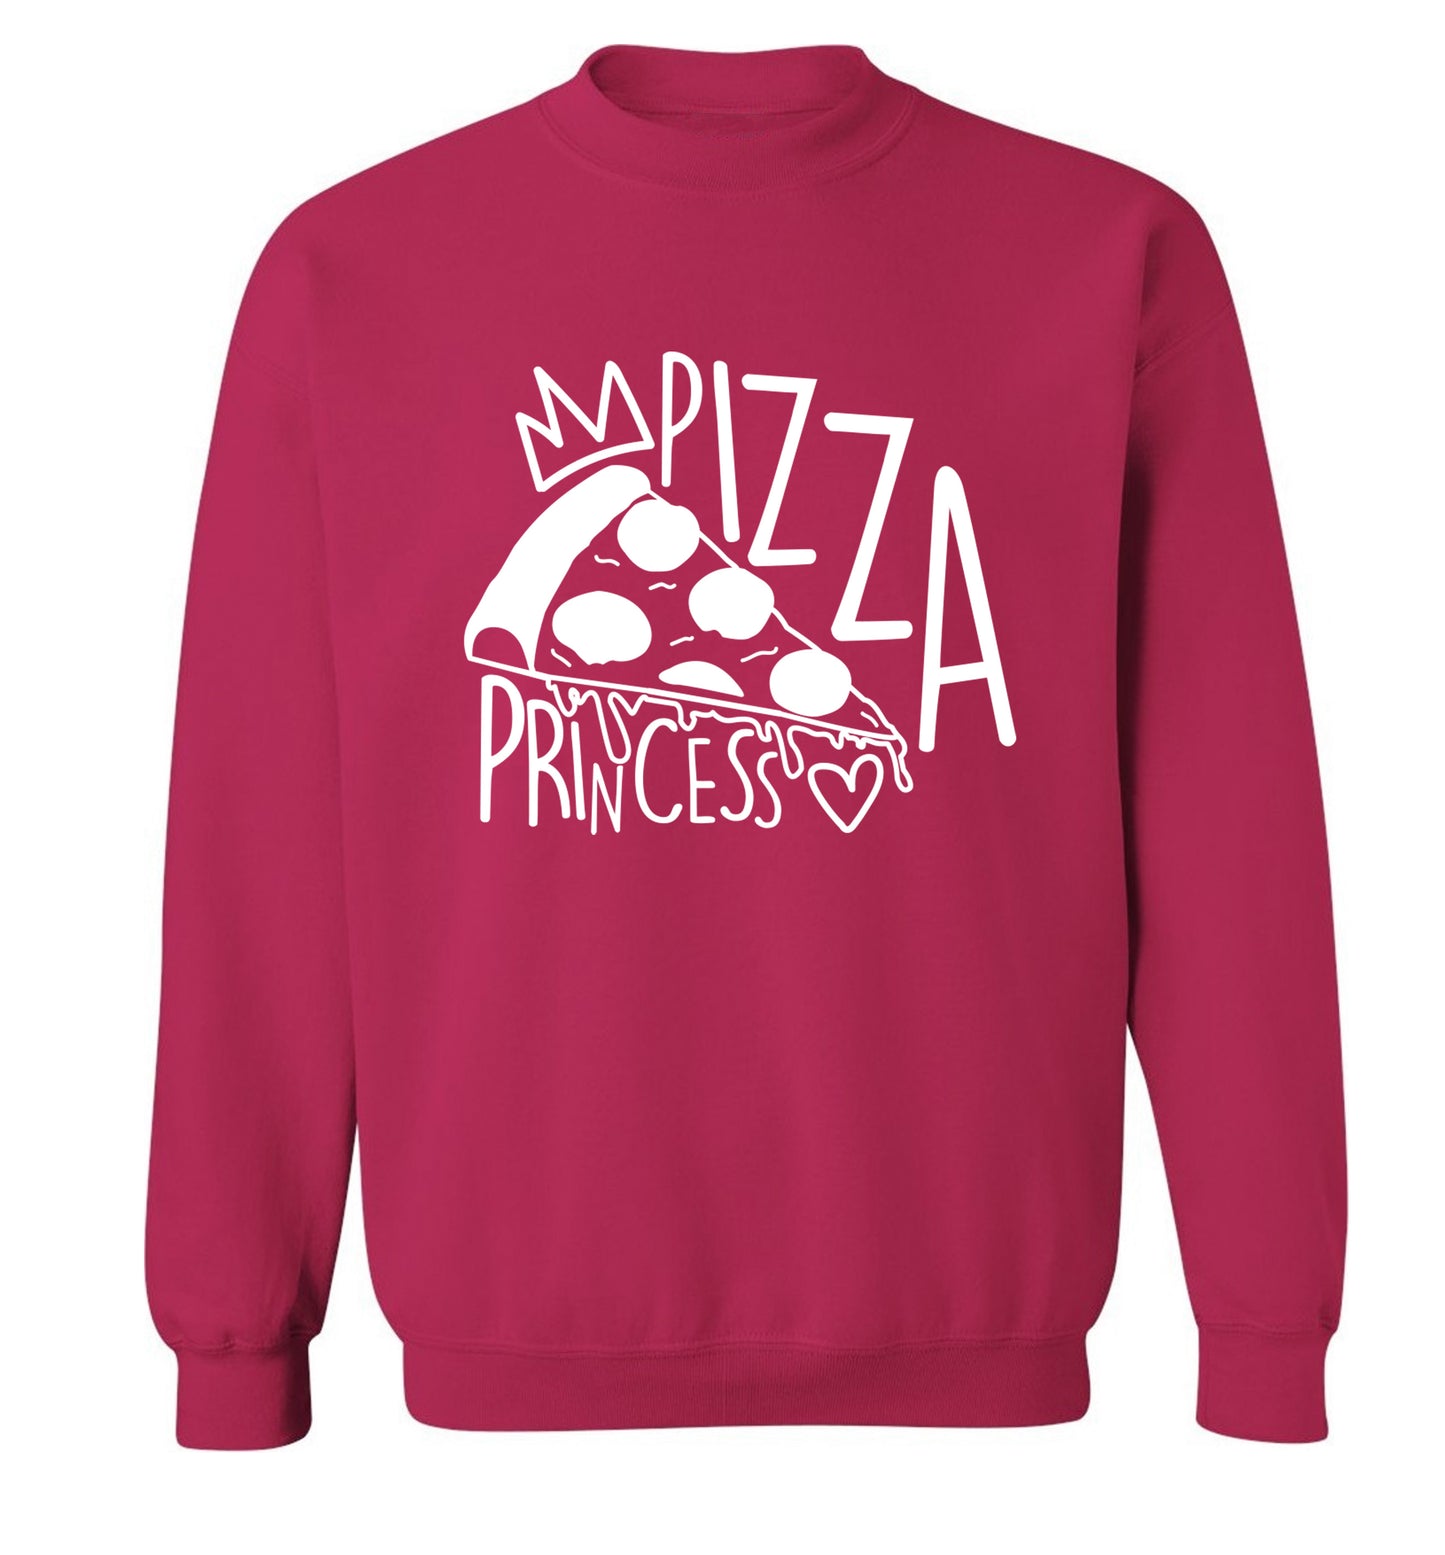 Pizza Princess Adult's unisex pink Sweater 2XL